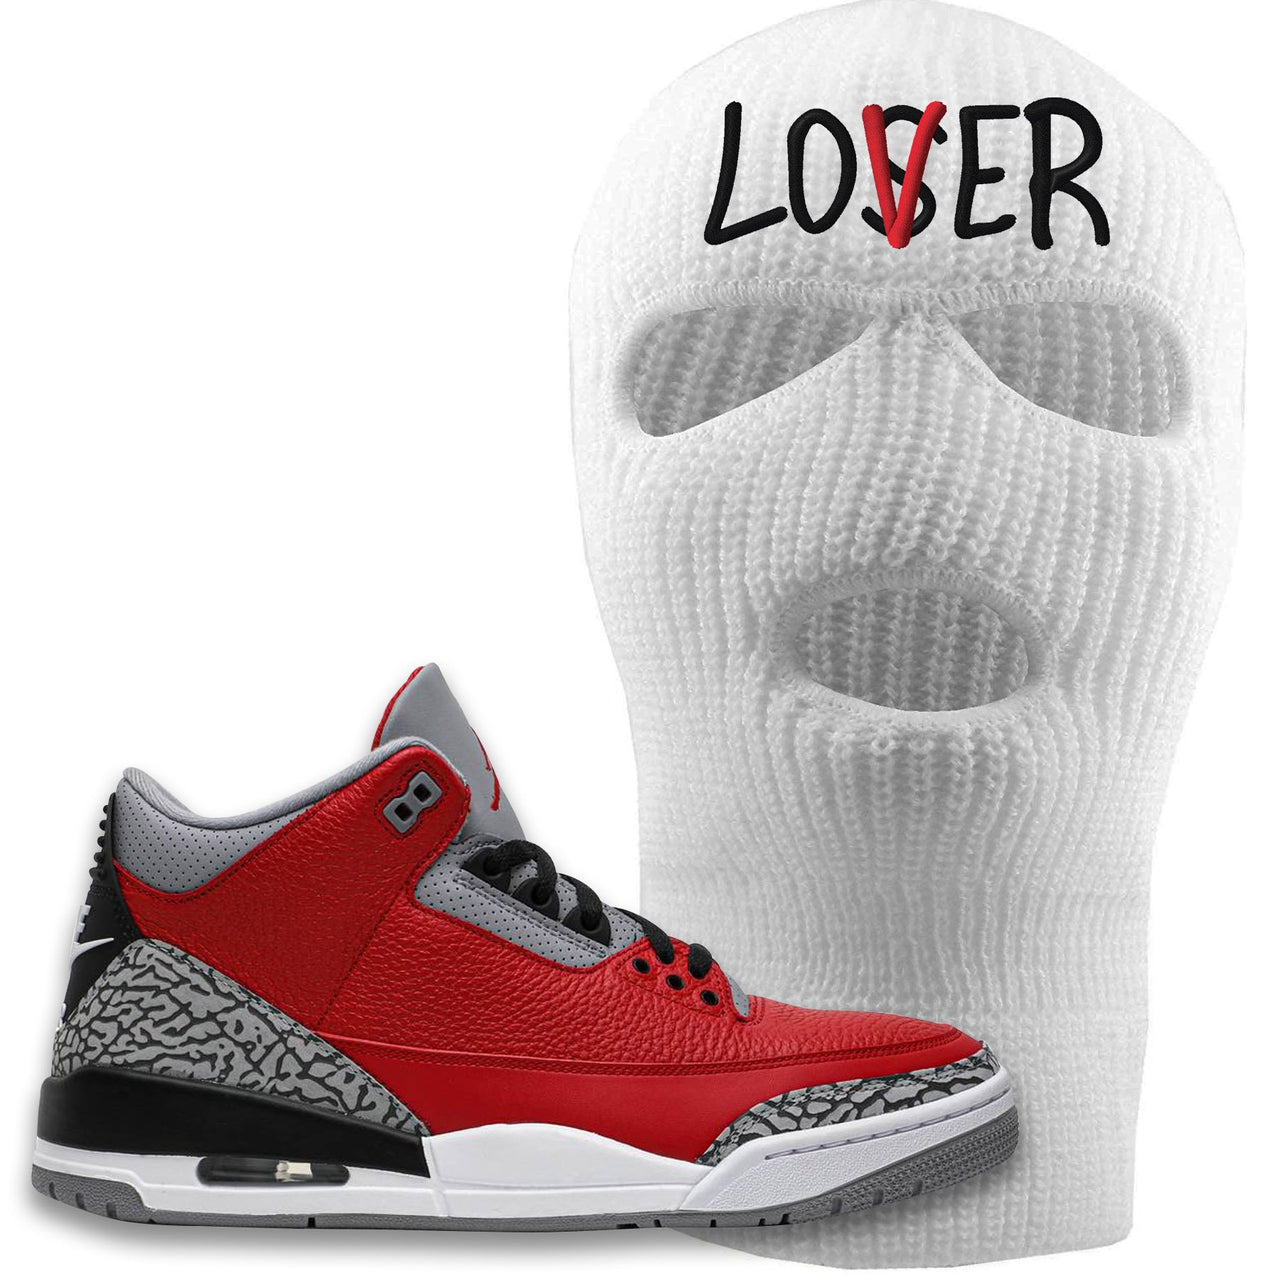 Jordan 3 Red Cement Chicago All-Star Sneaker White Ski Mask | Winter Mask to match Jordan 3 All Star Red Cement Shoes | Lover